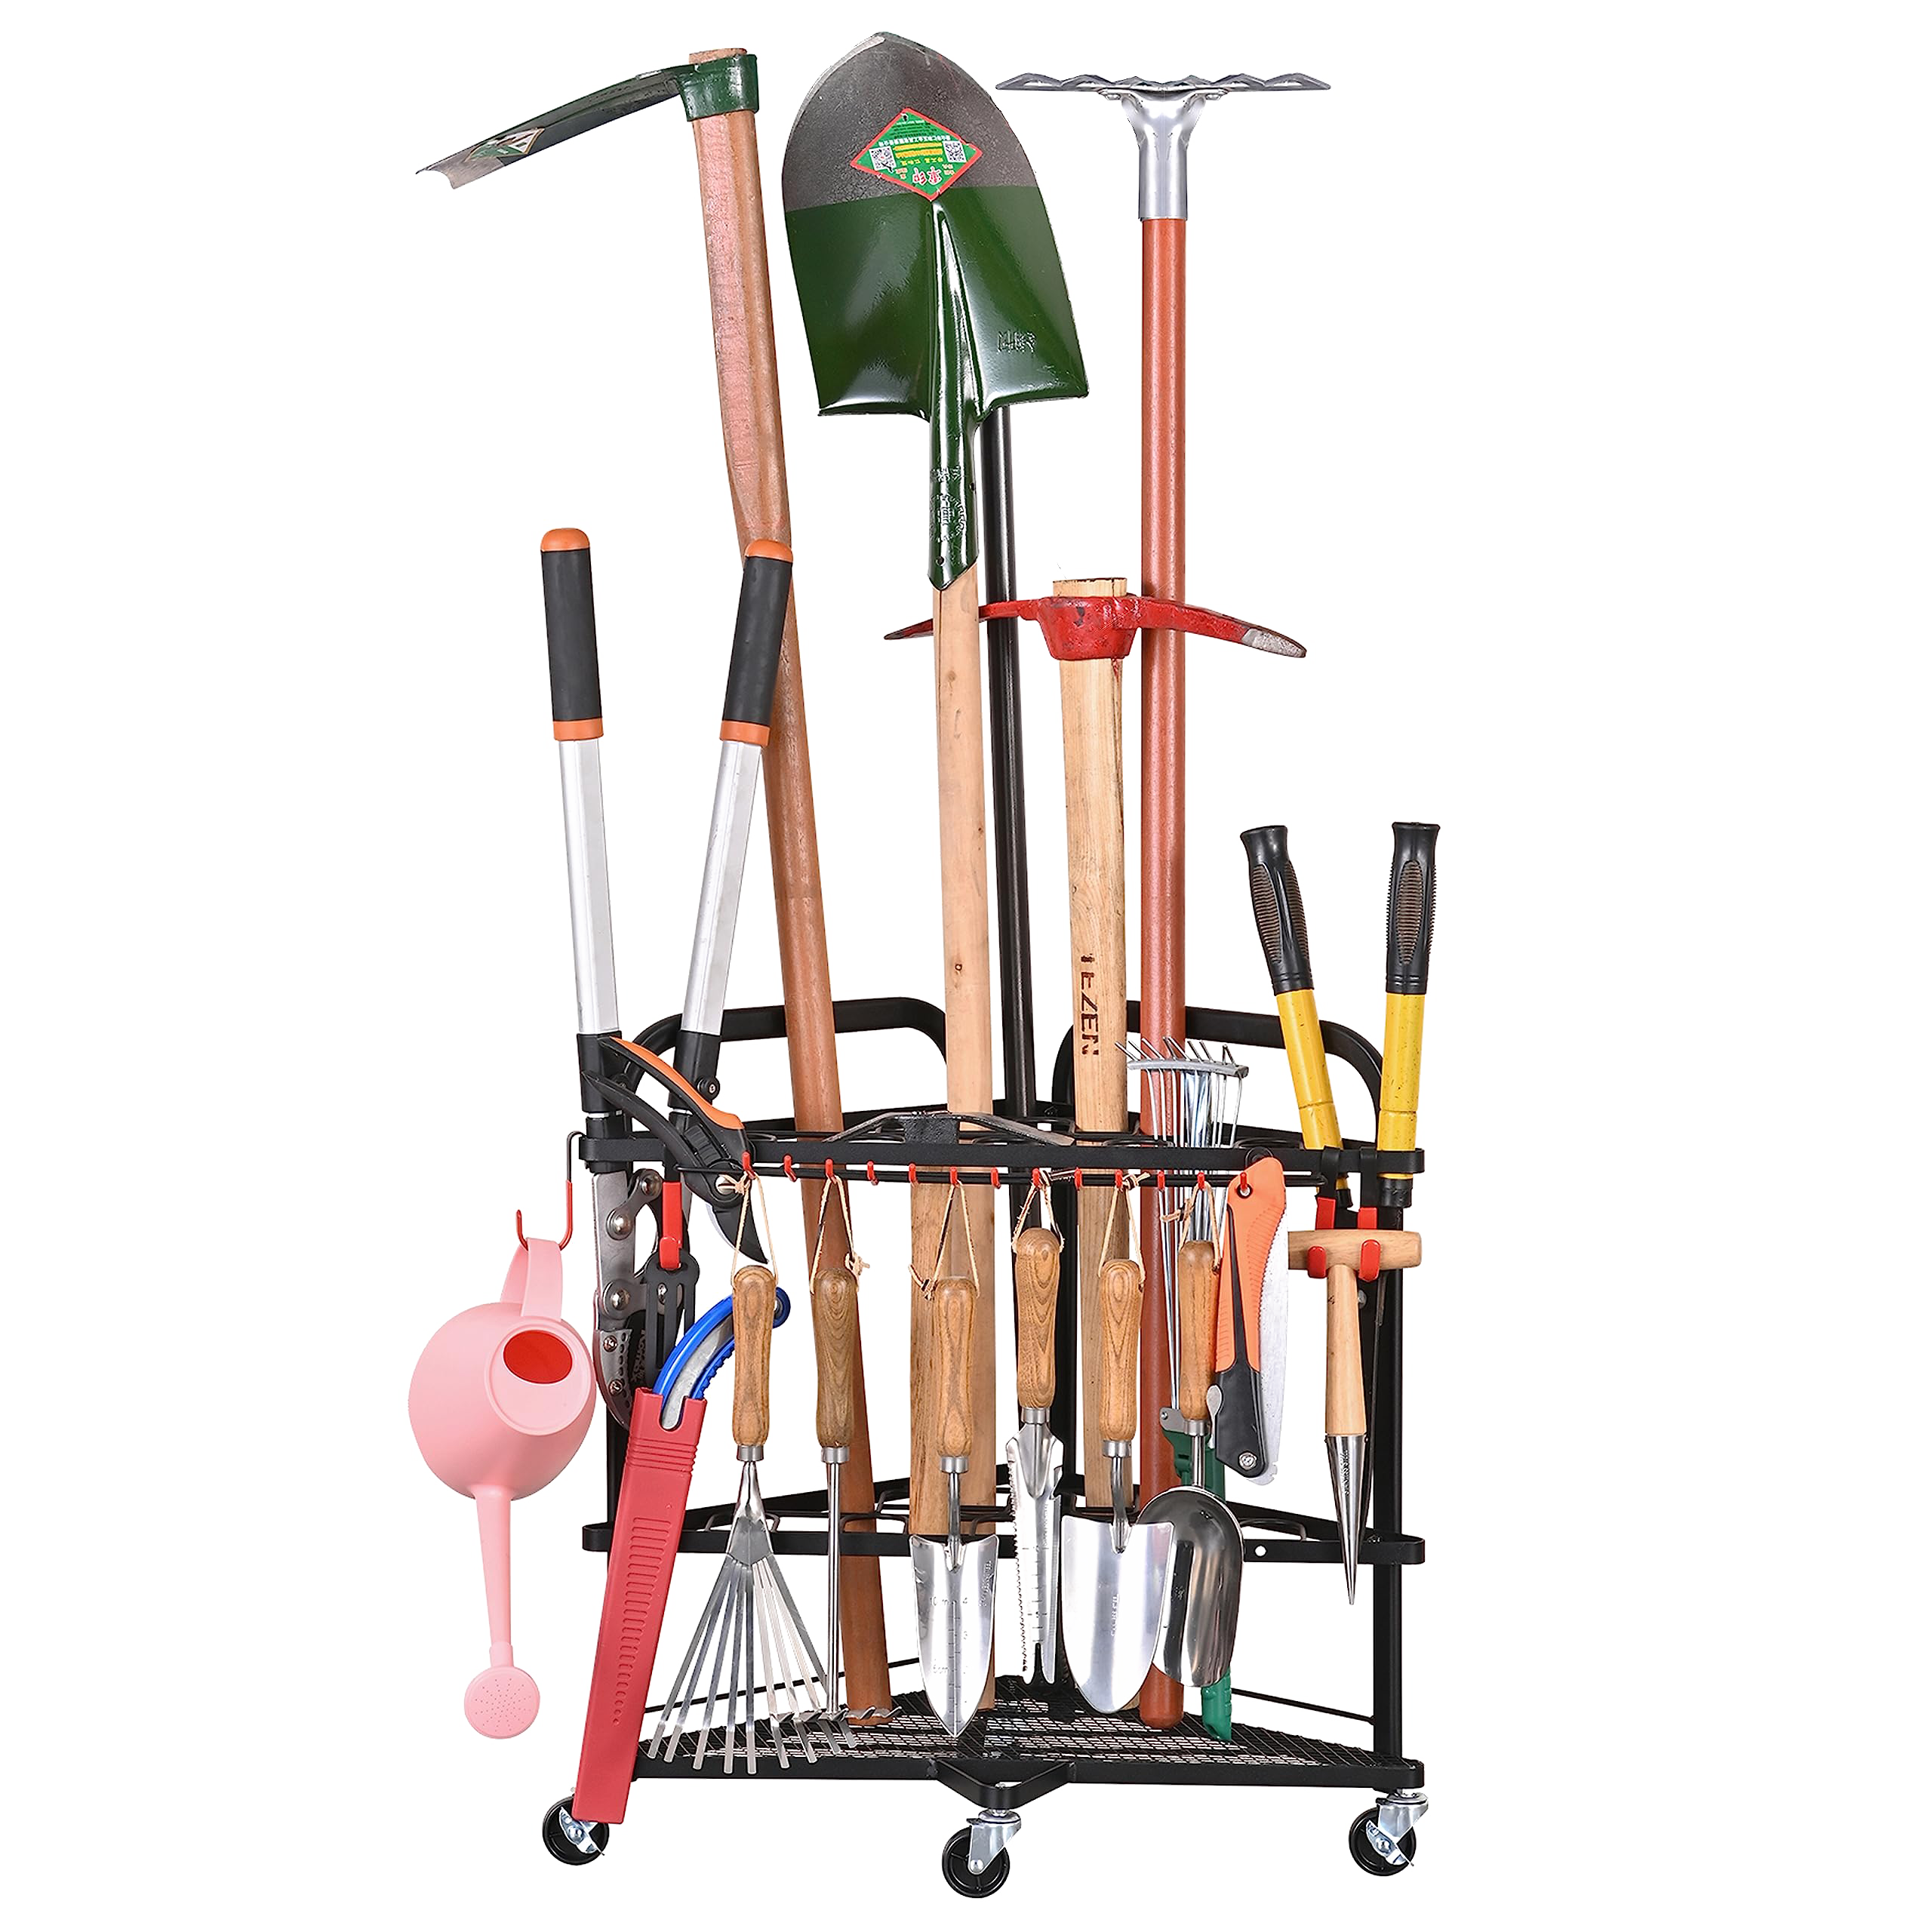 PLKOW Garden Tool Organizer with Wheels and Storage Hooks, Rolling Corner Tool Storage Rack for Garden